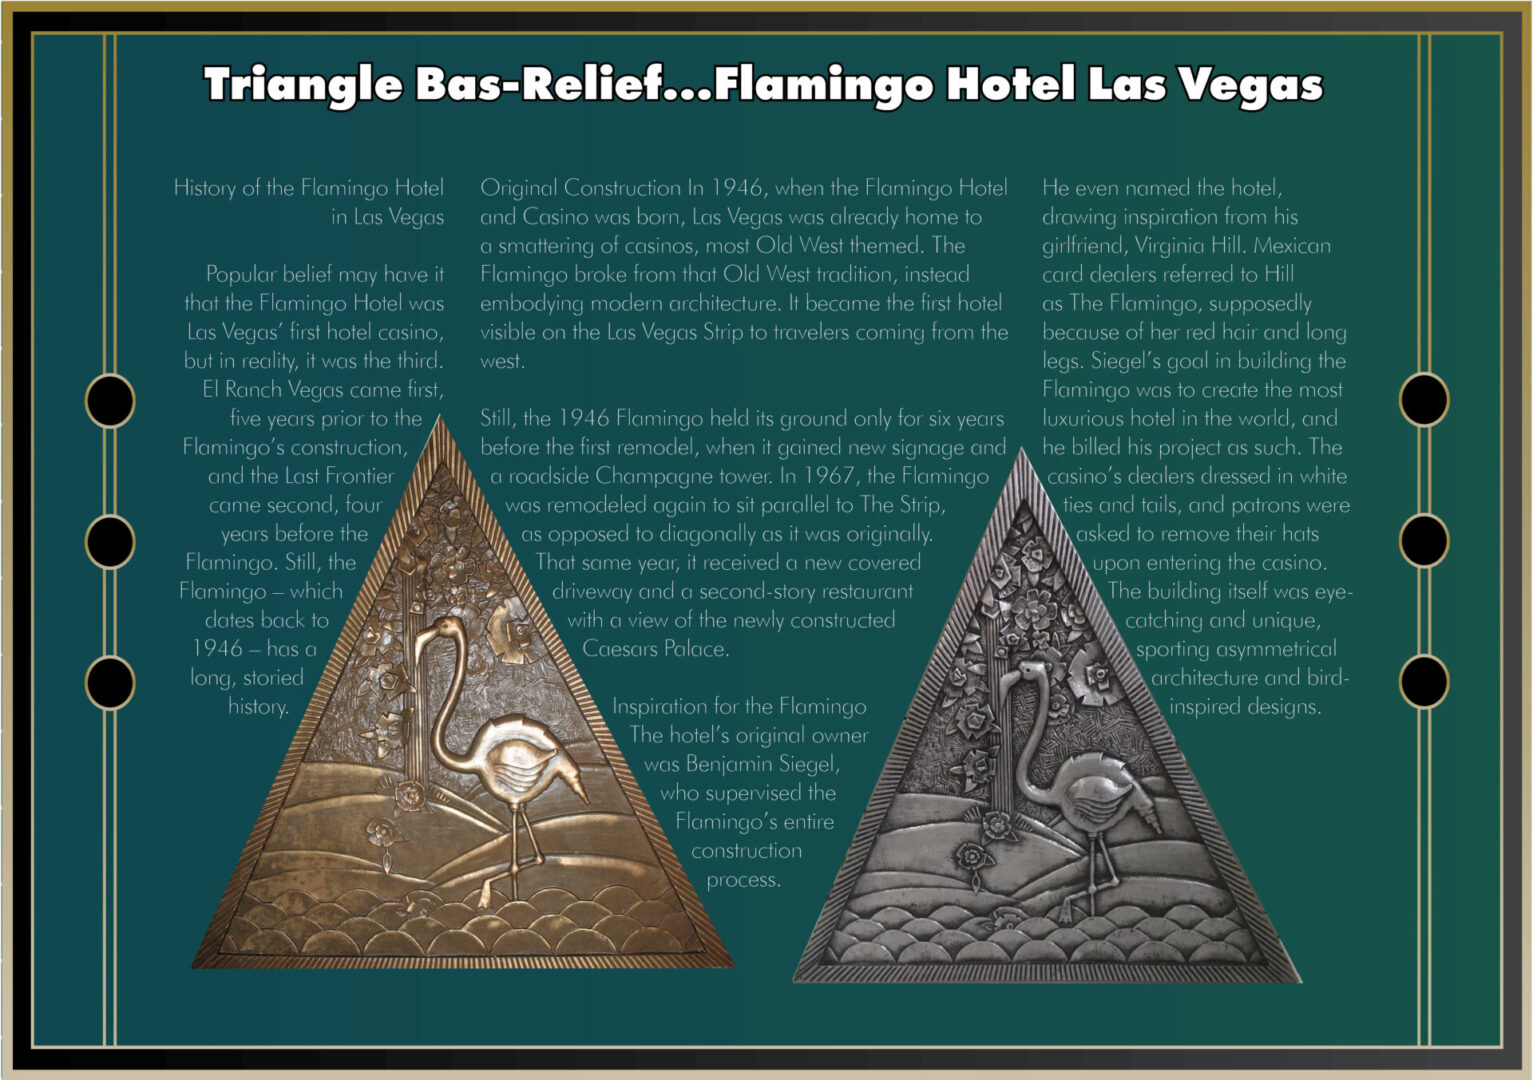 Triangular Bas Relief for Flamingo Hotel in Las Vegas